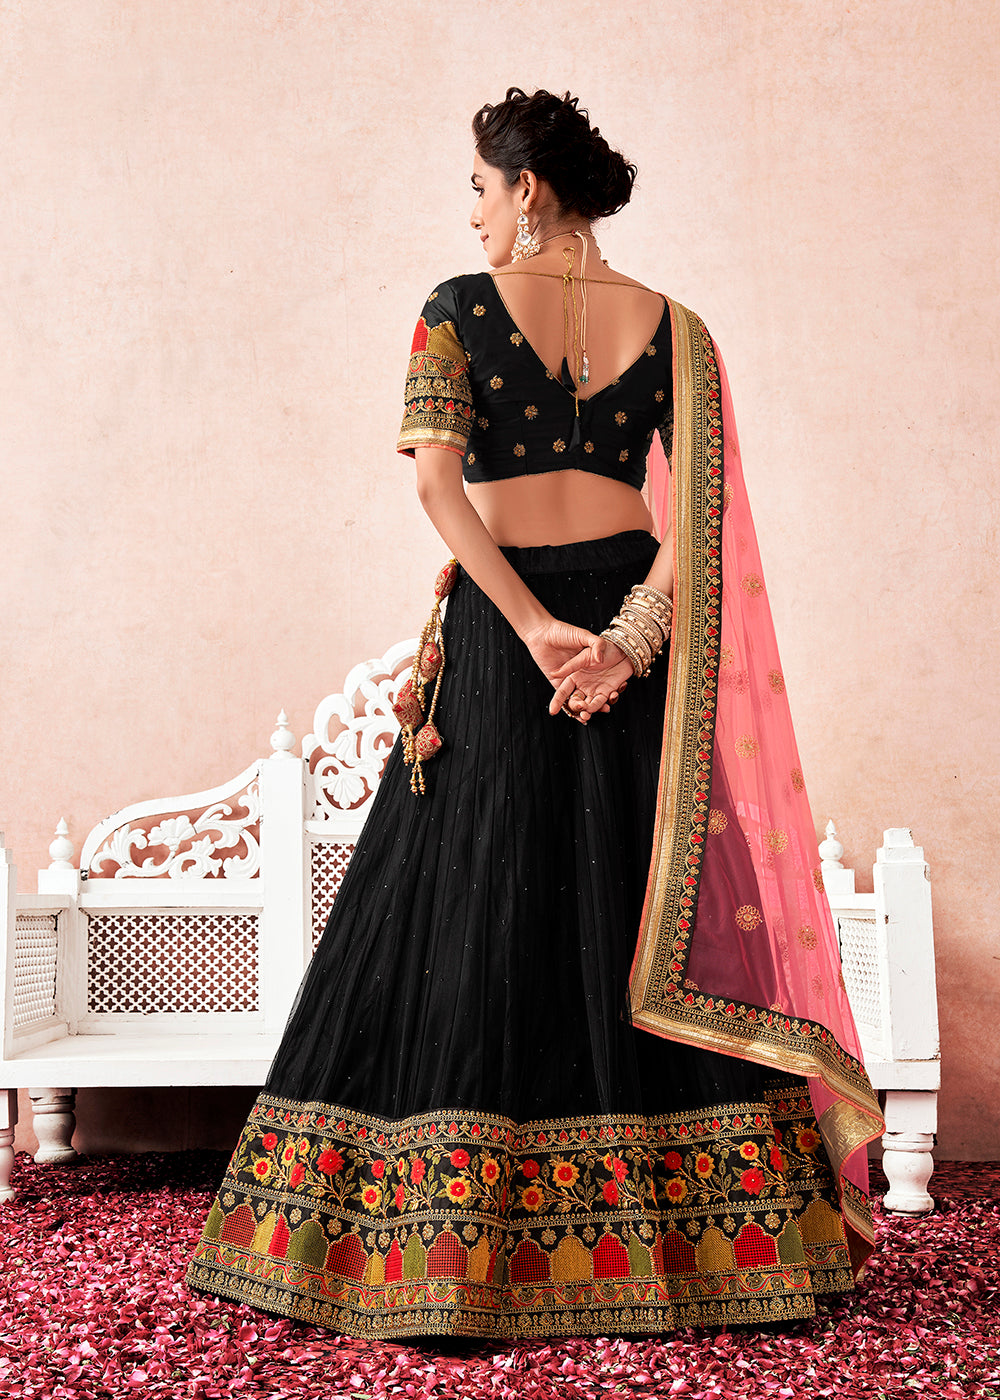 Buy Now Traditional Regal Black Kalidar Embroidered Net Lehenga Choli Online in USA, UK, Canada & Worldwide at Empress Clothing. 